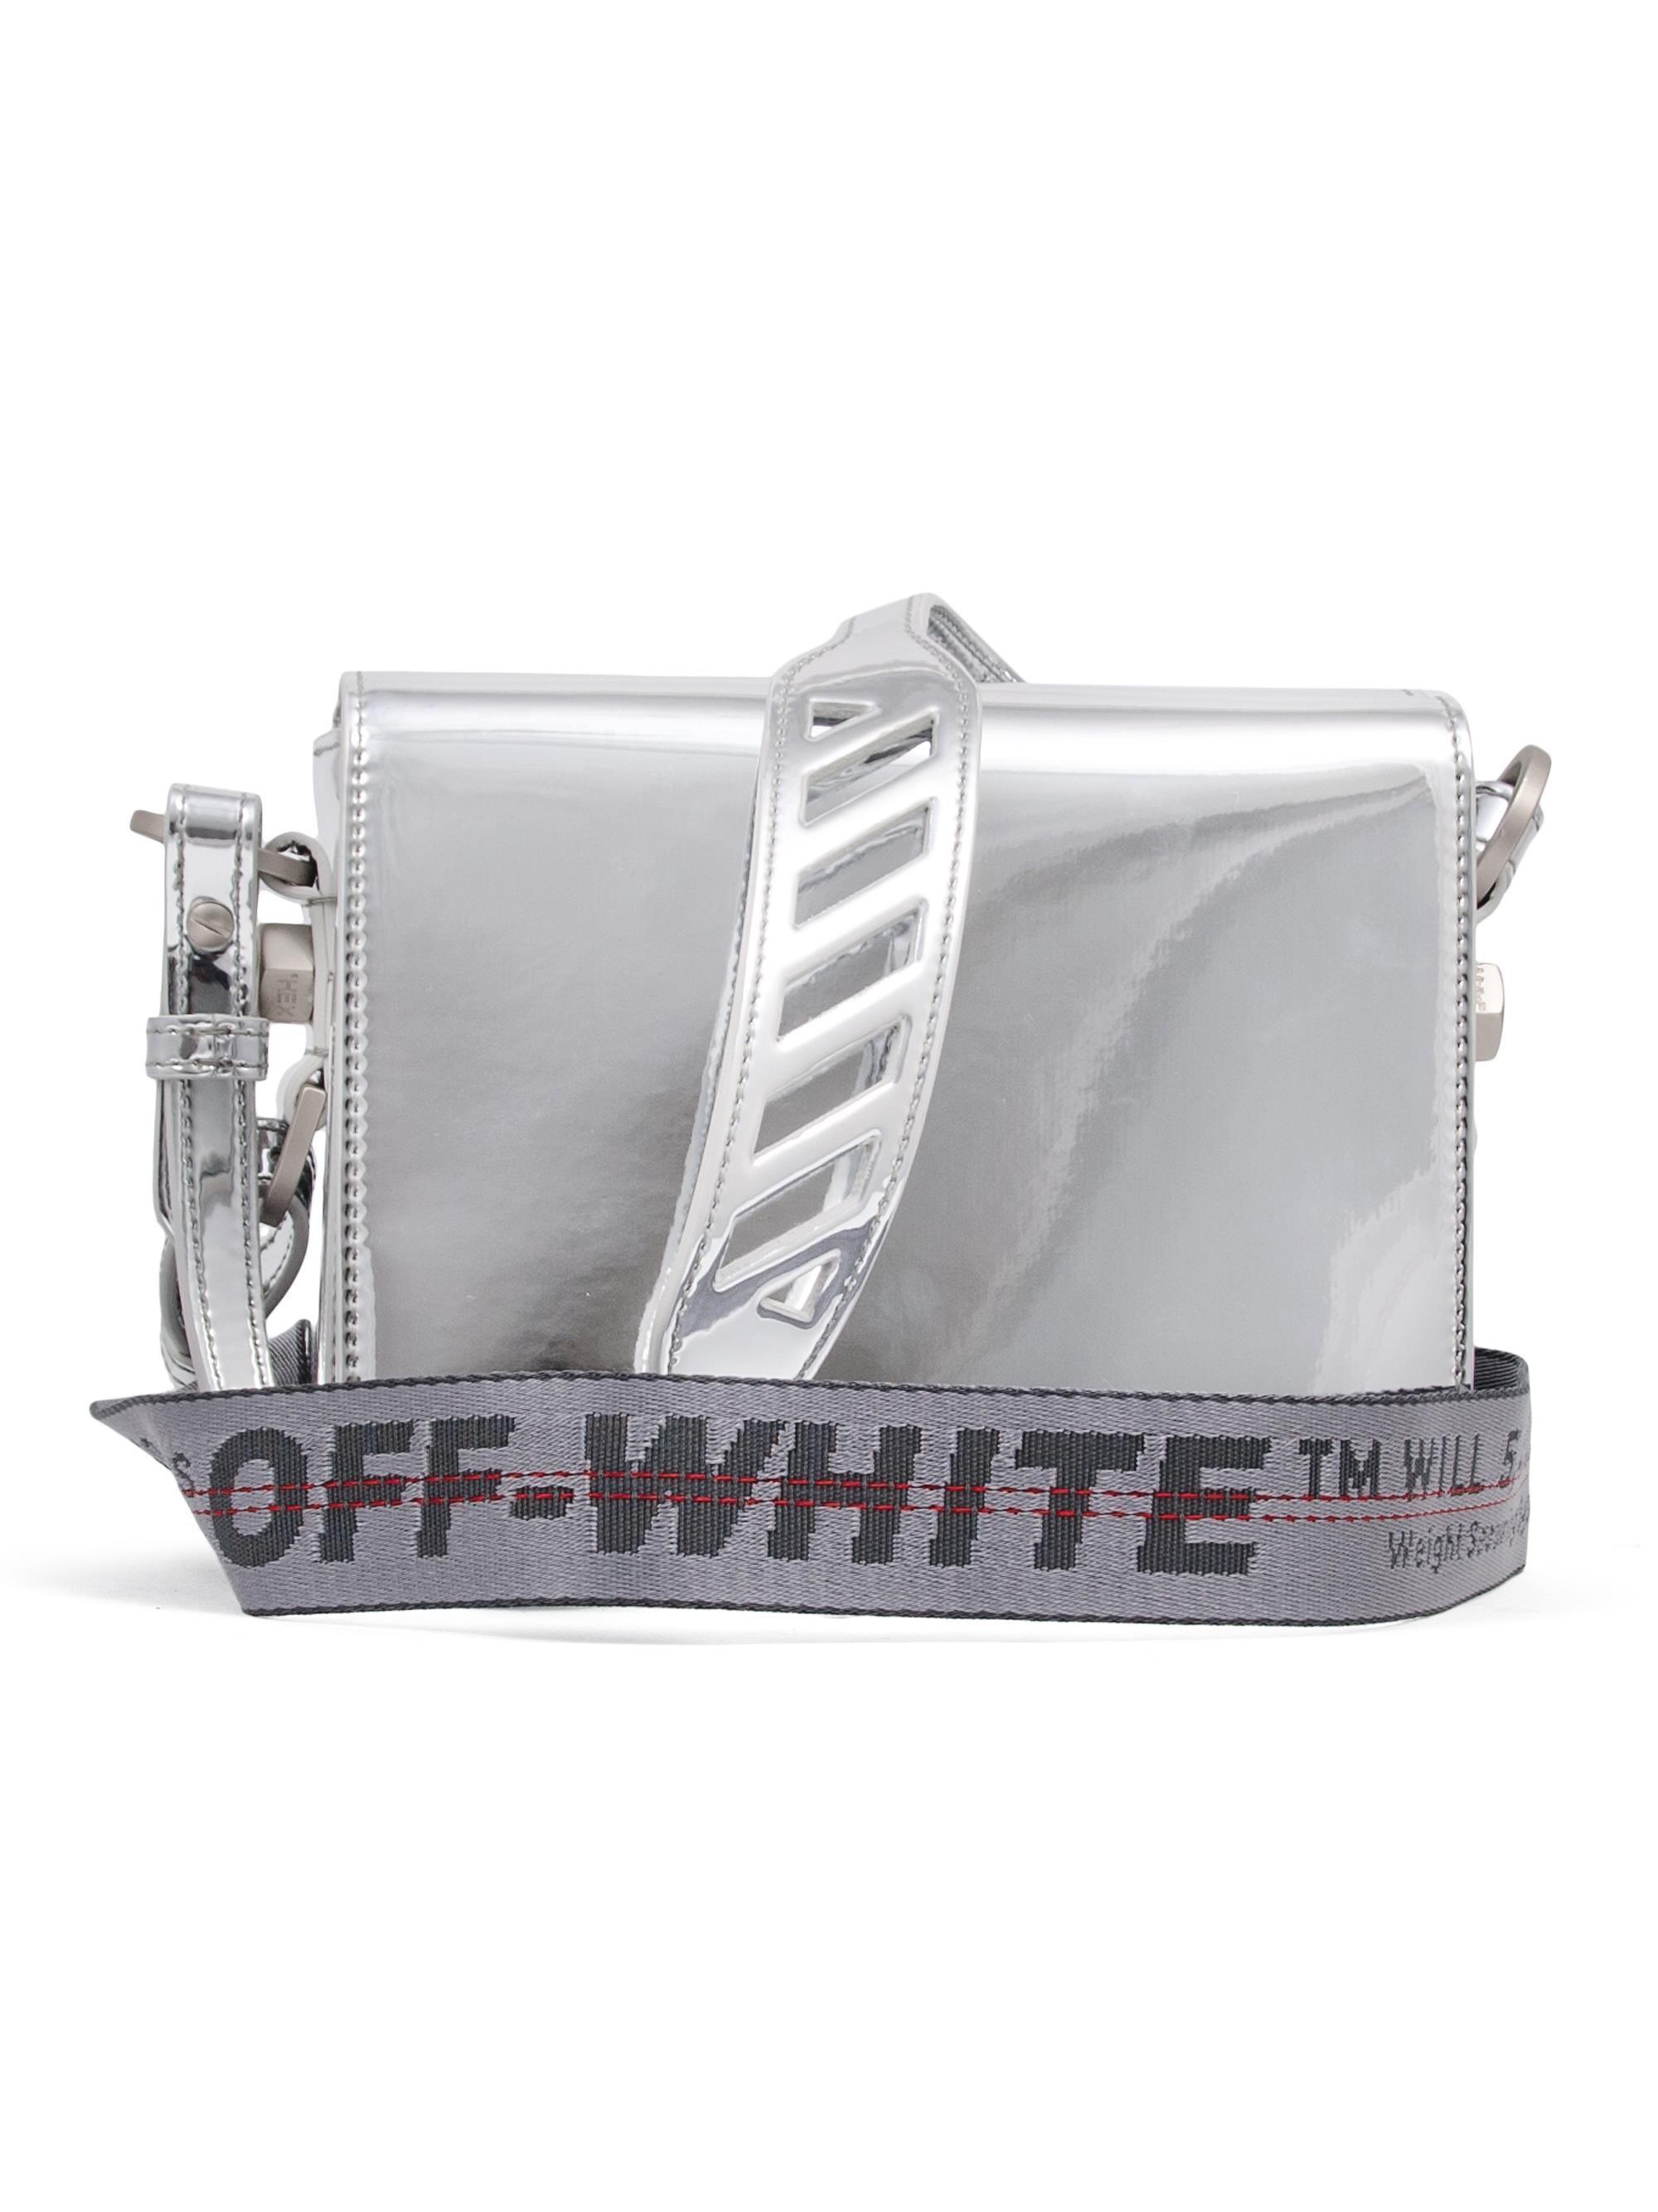 Off-White c/o Virgil Abloh Binder Clip Mirror Bag | Lyst